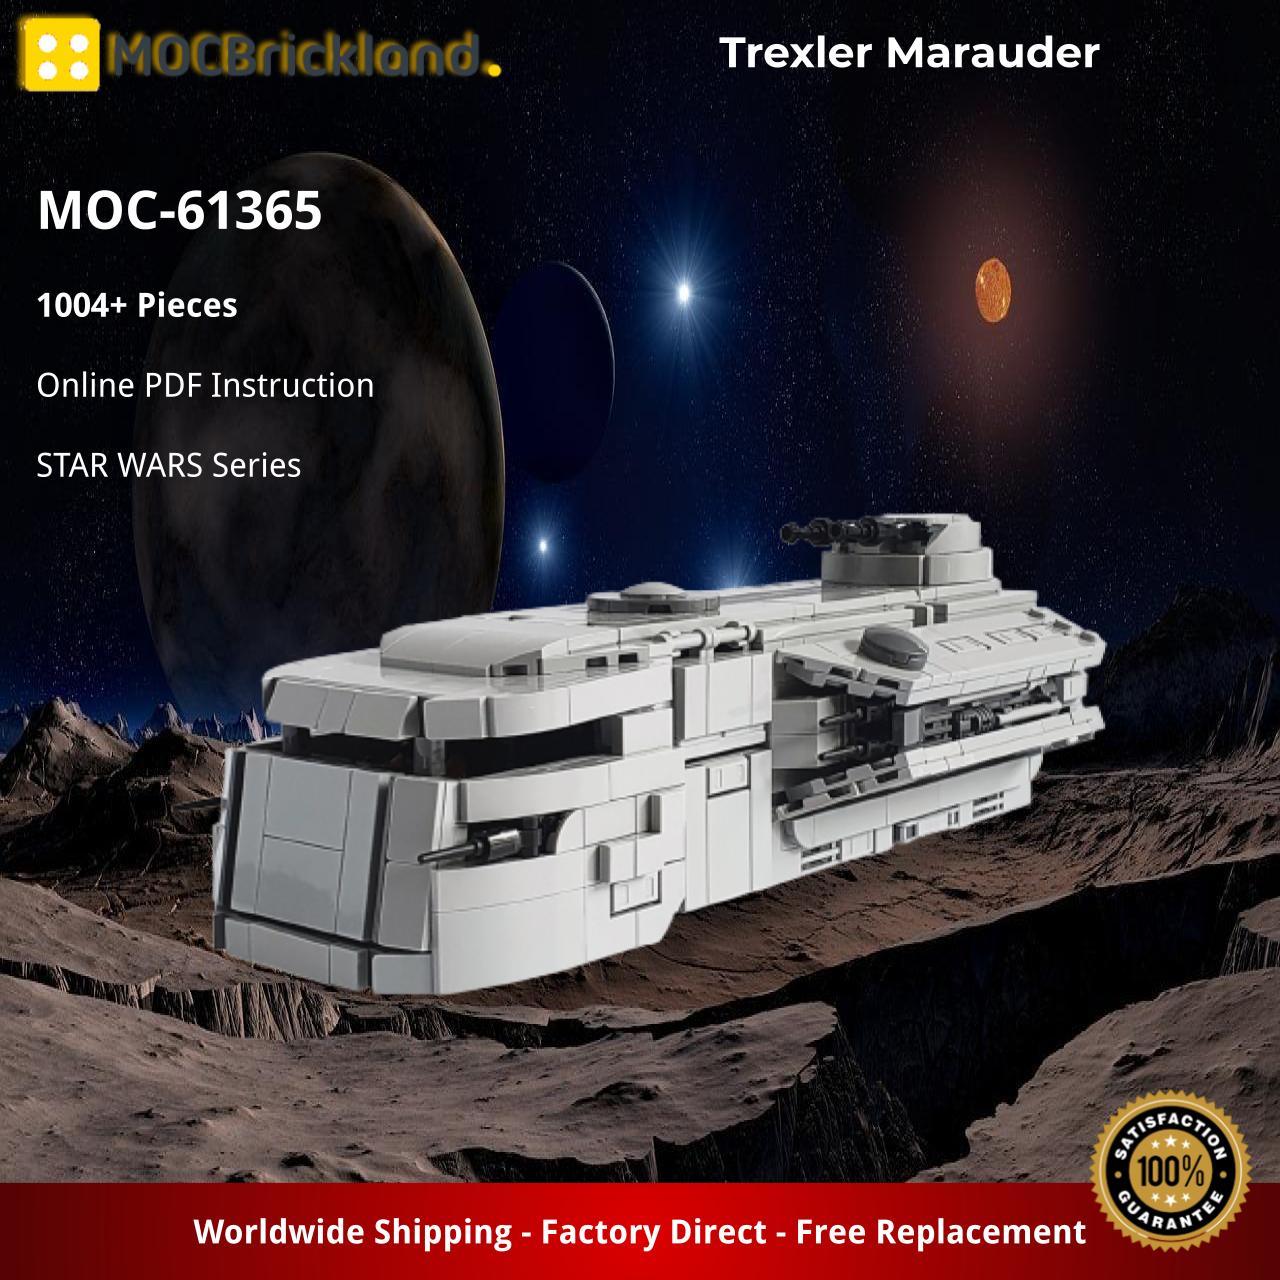 Trexler Marauder STAR WARS MOC-61365 WITH 1004 PIECES - MOC Brick Land